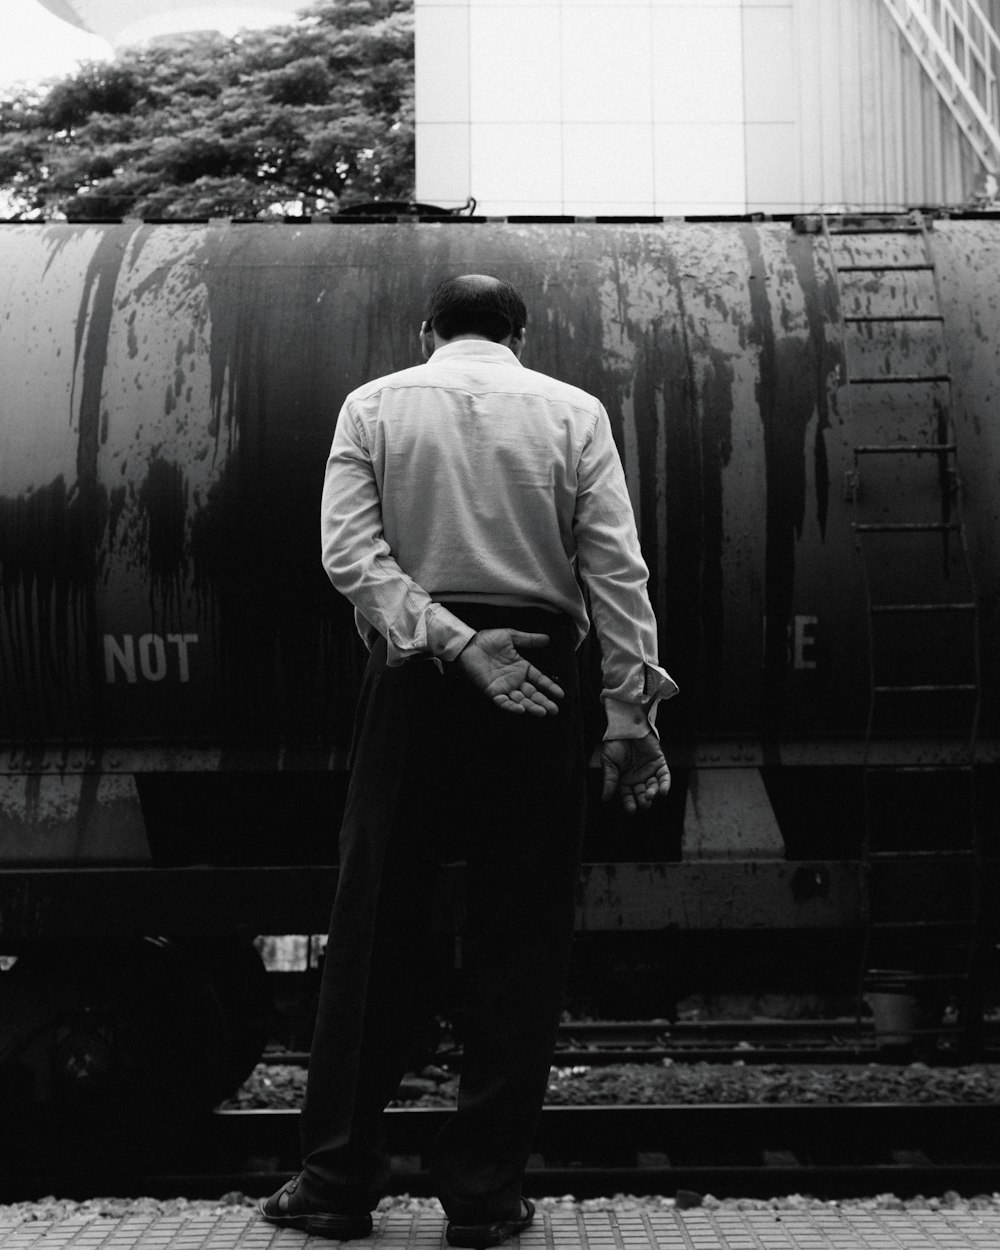 a man standing next to a train